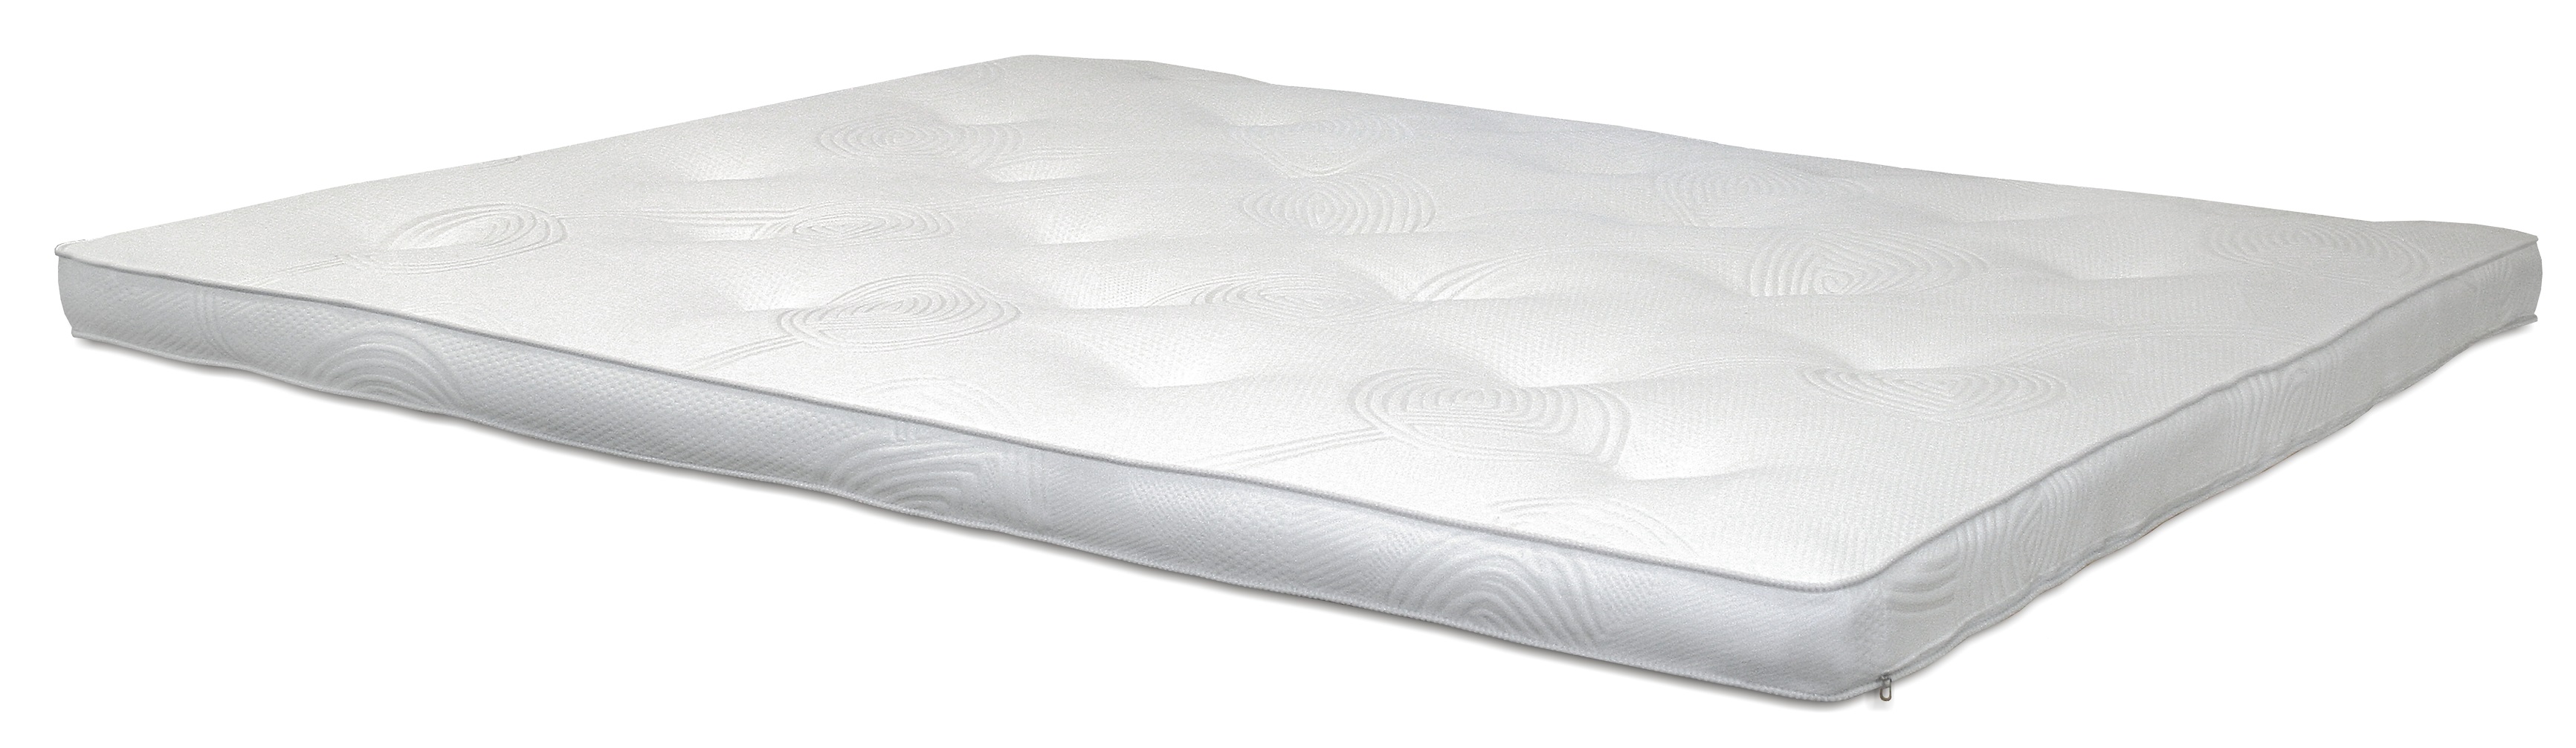 GRAND TOP mattress WHITE 1 9